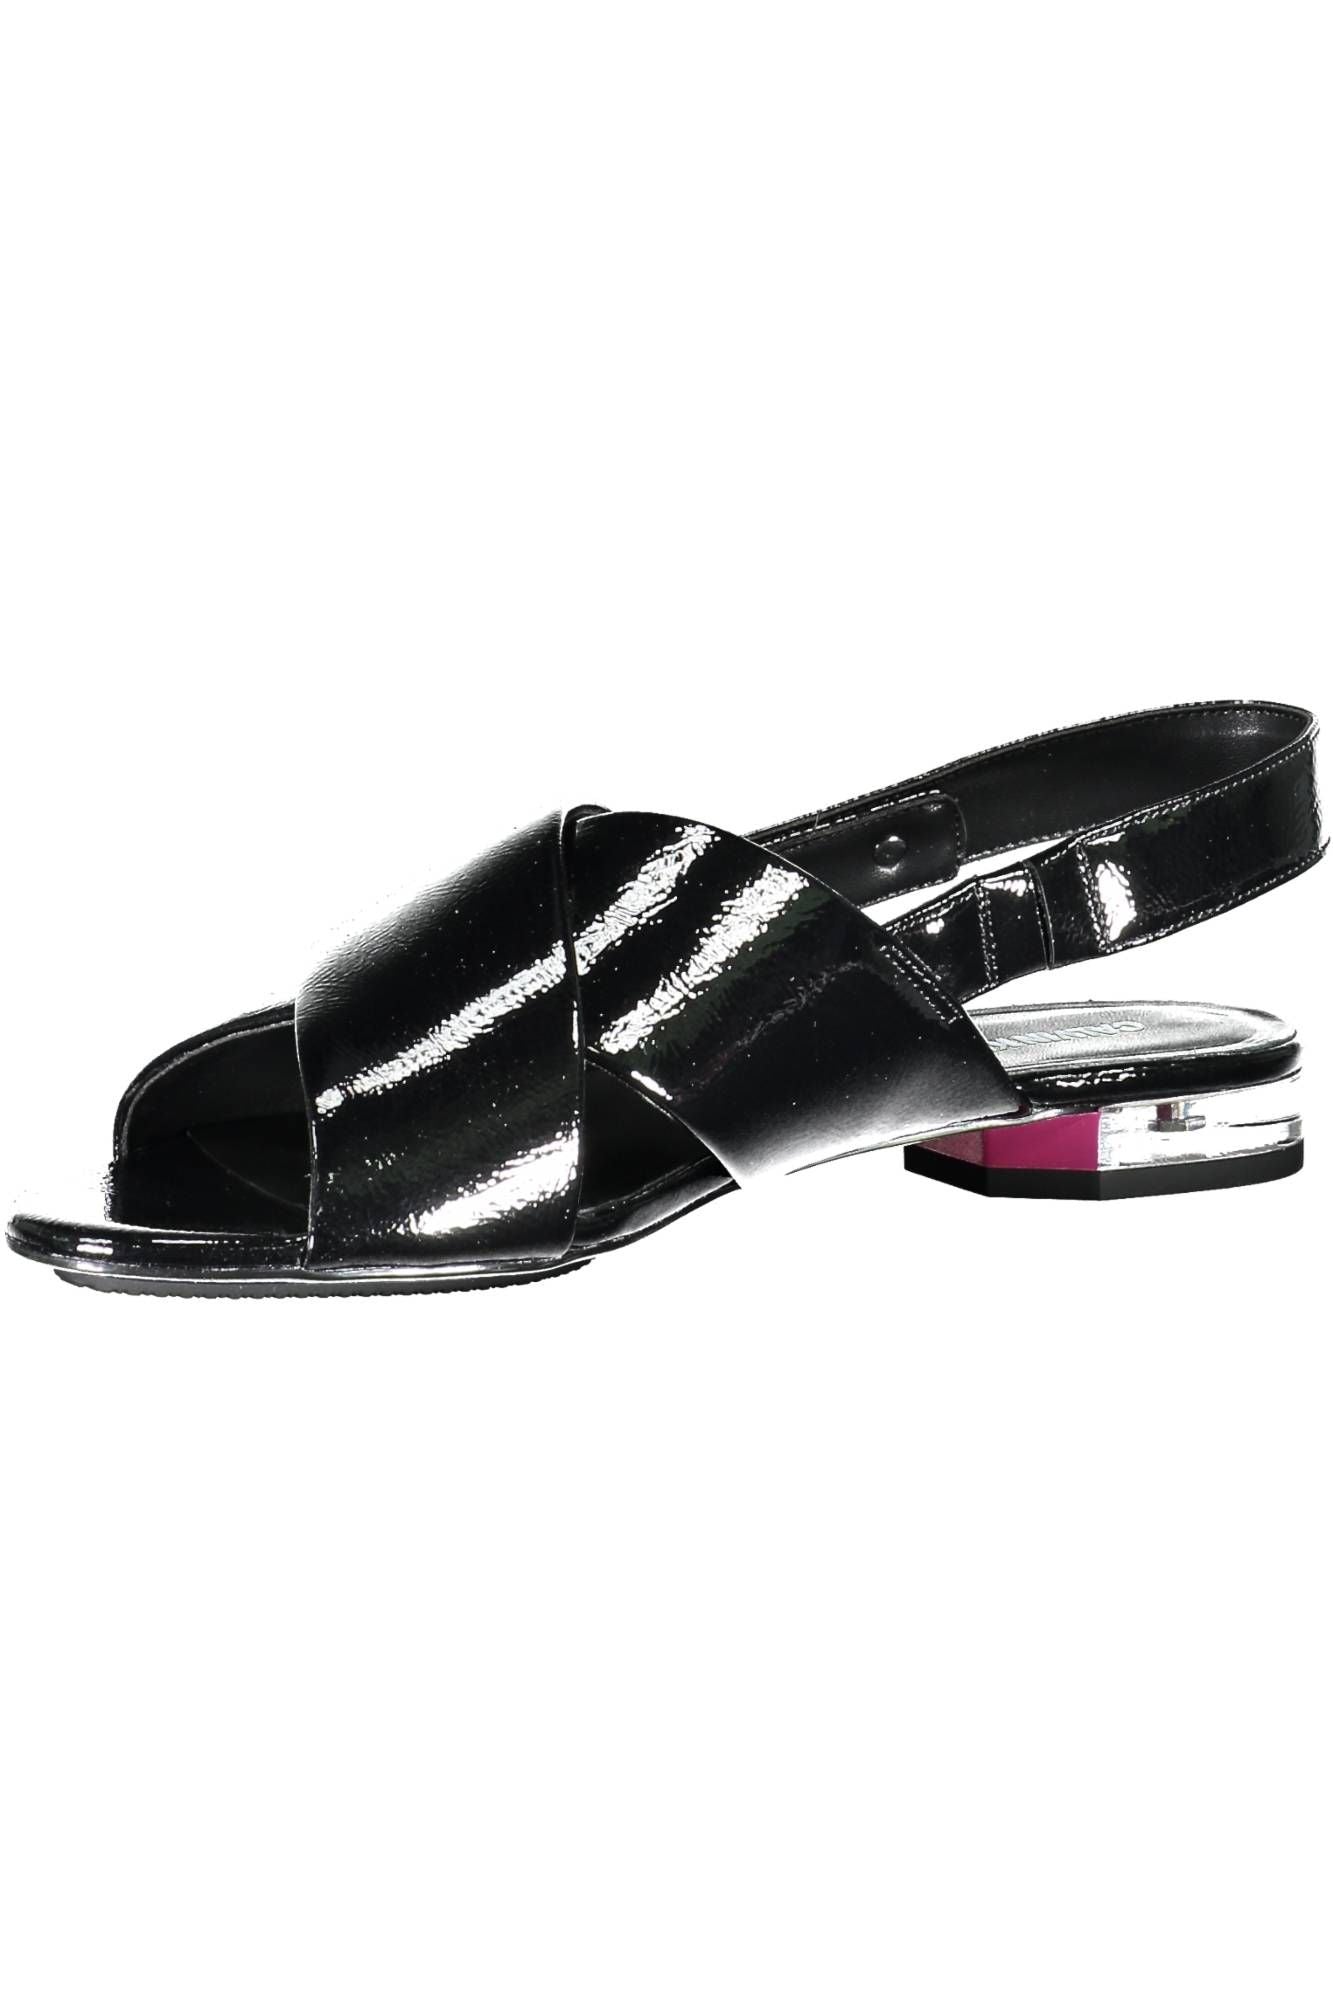 Chic Cross-Front Flat Sandals in Sleek Black